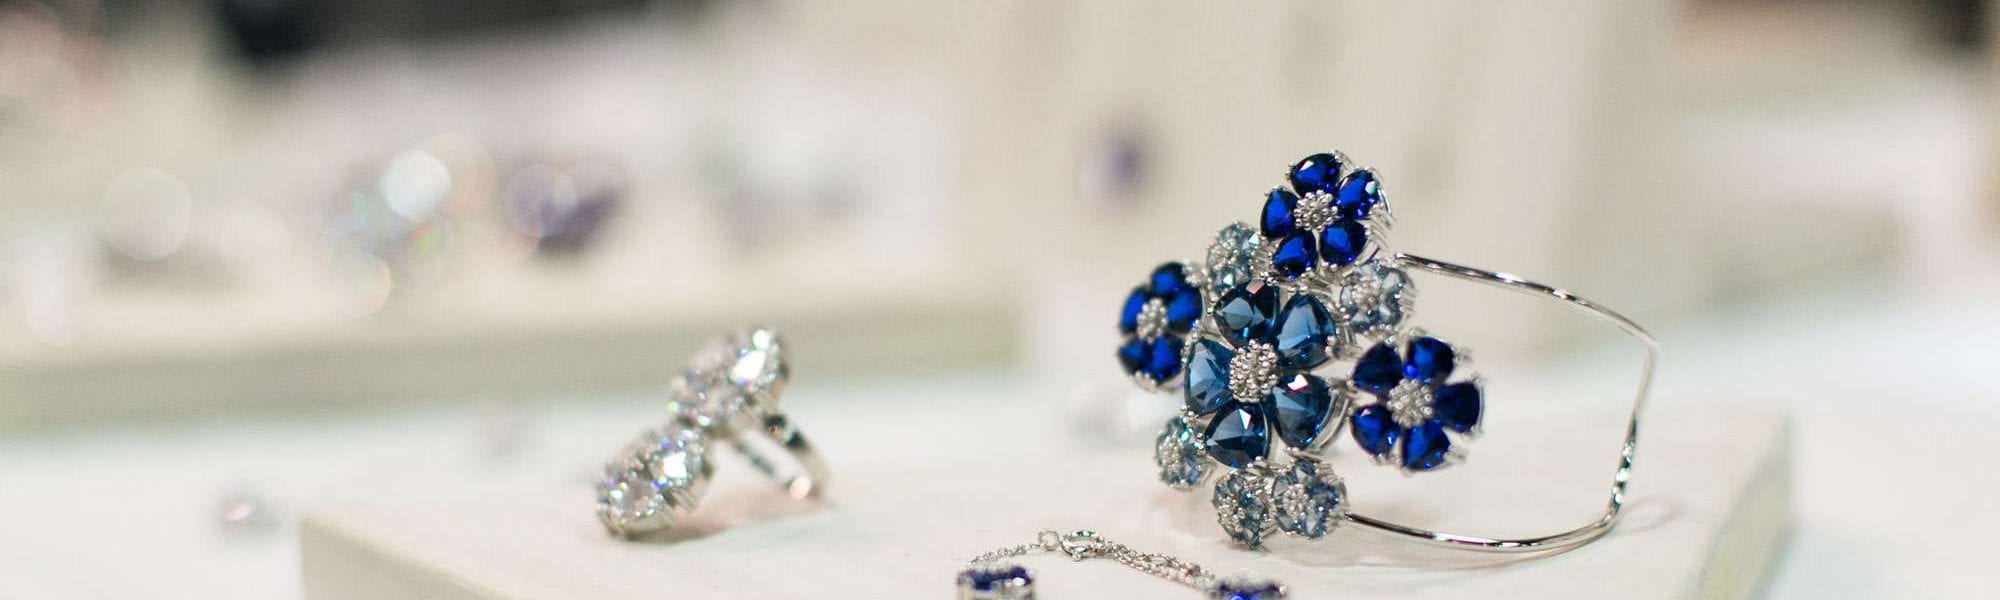 A woman's silver bracelet with blue gemstone flowers